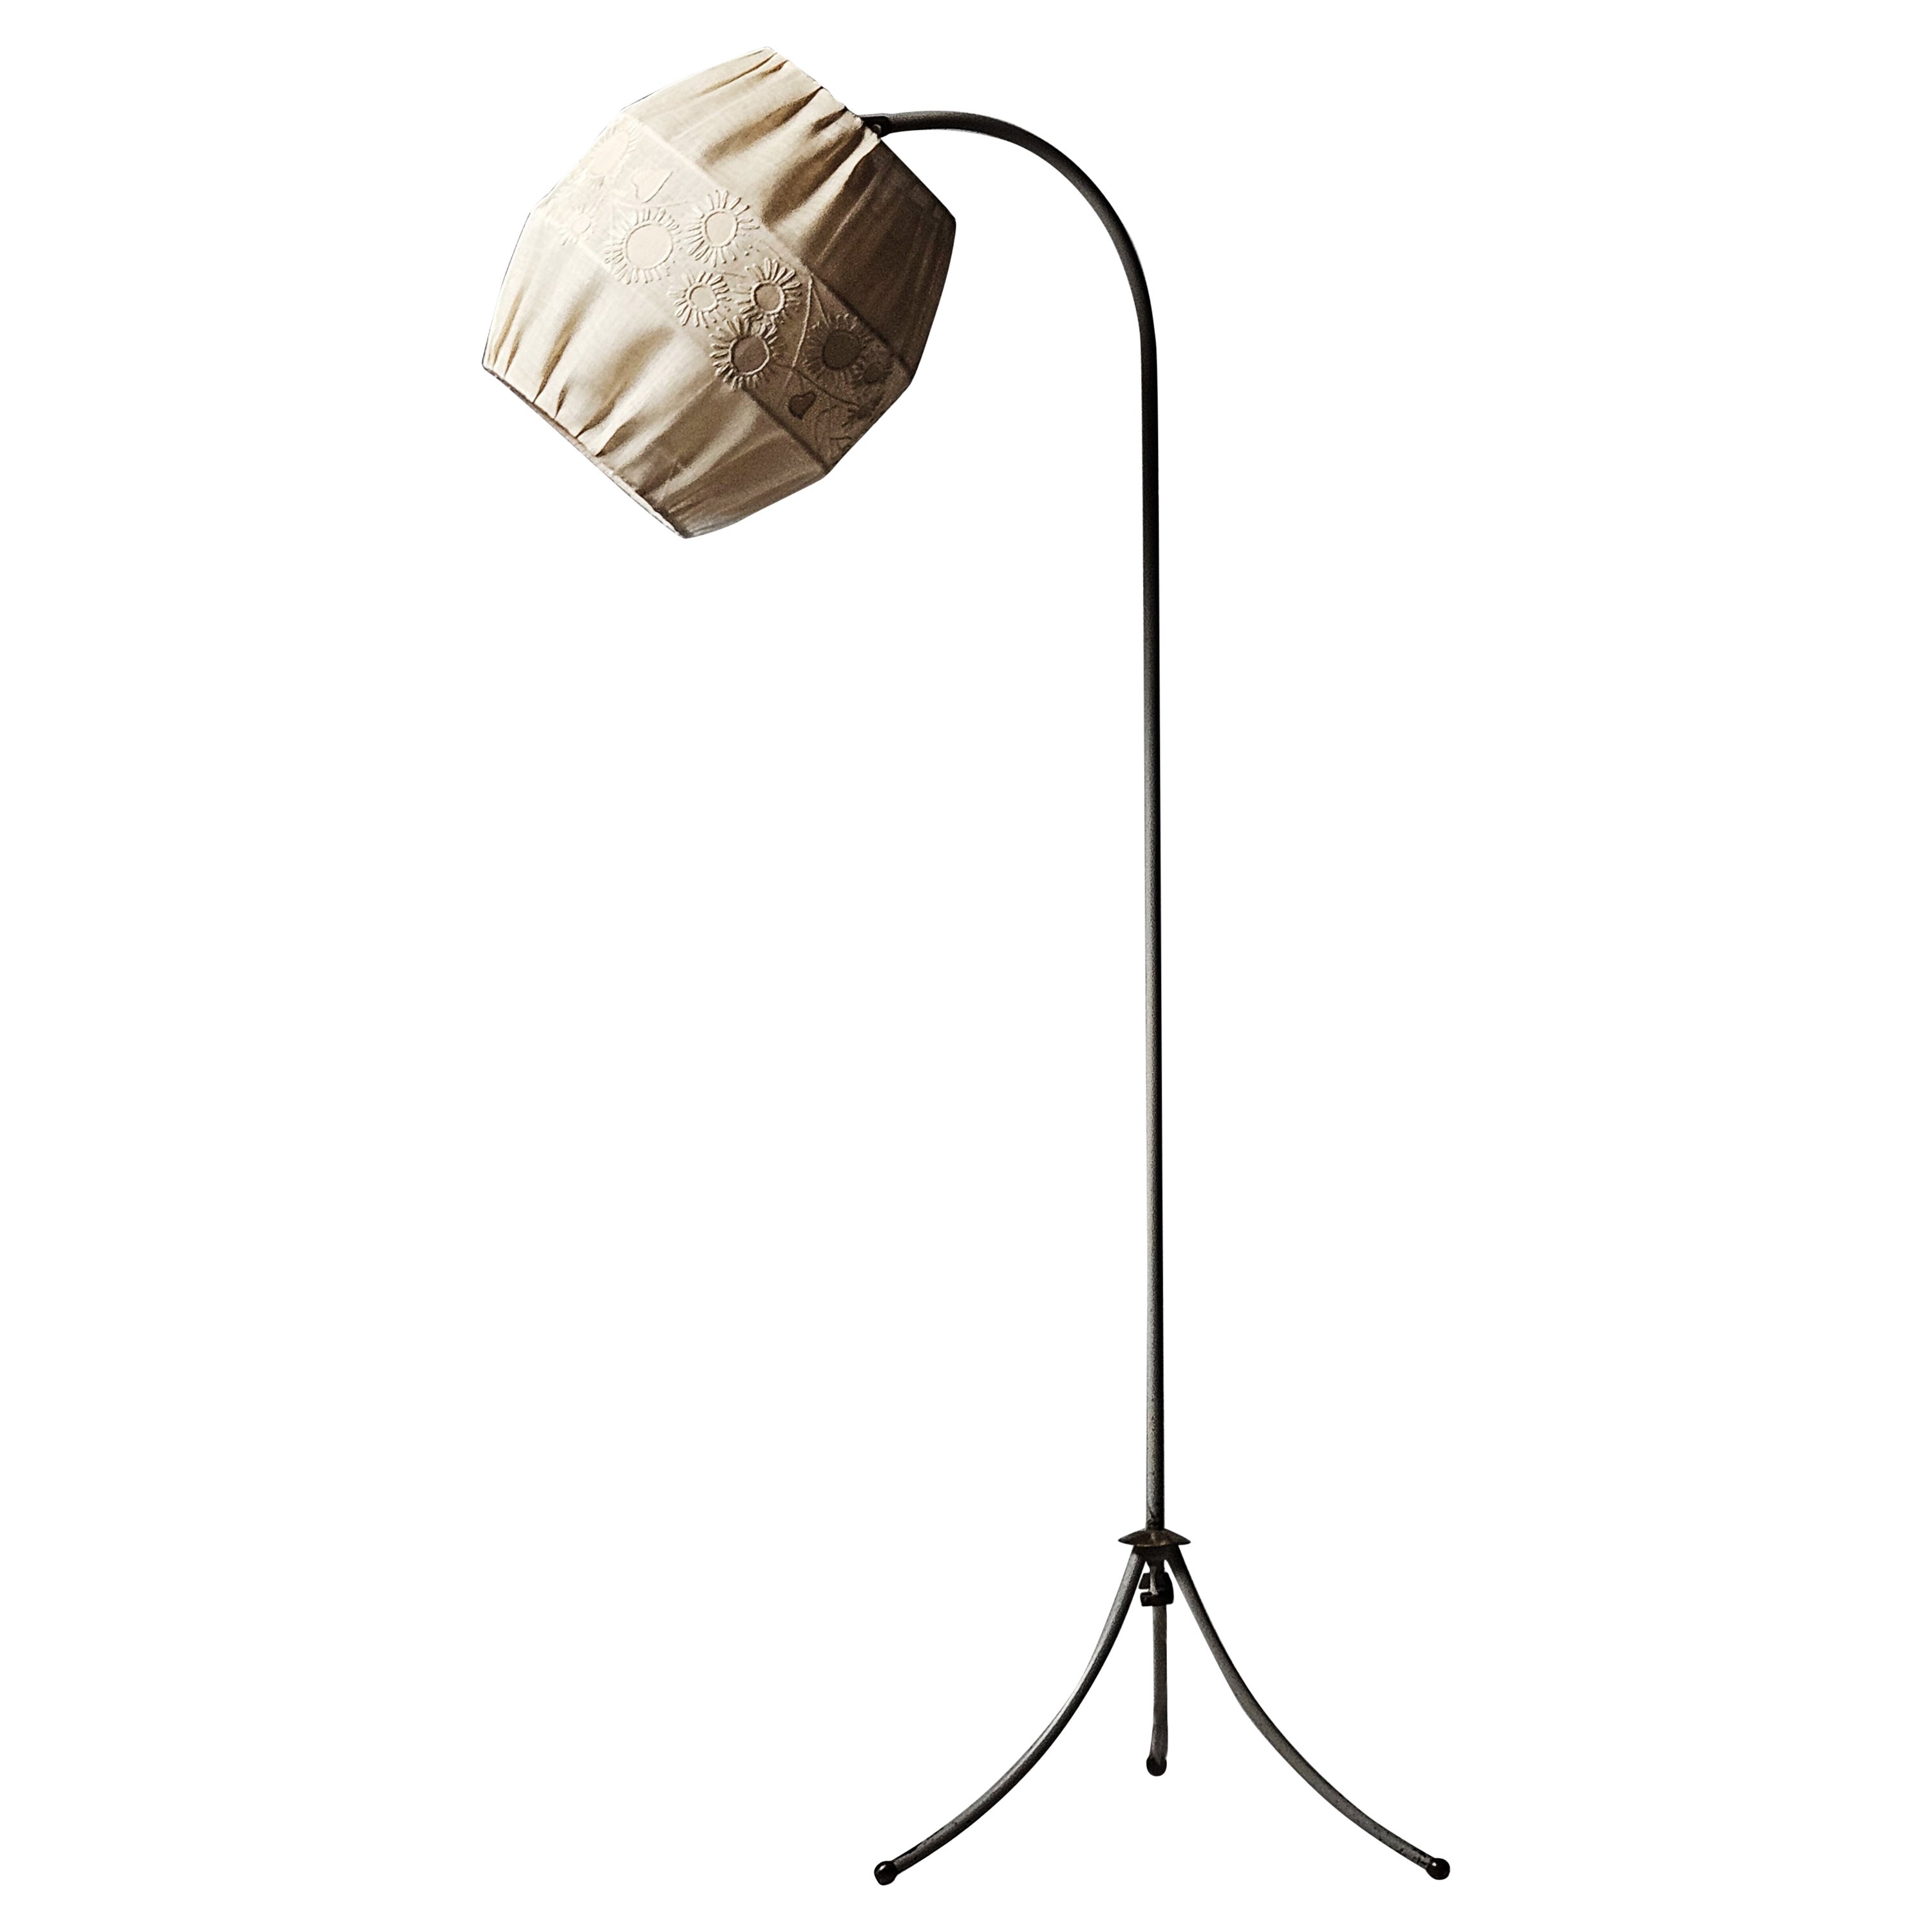 Scandinavian modern floor lamp by unknown designer, Sweden, 1960s For Sale